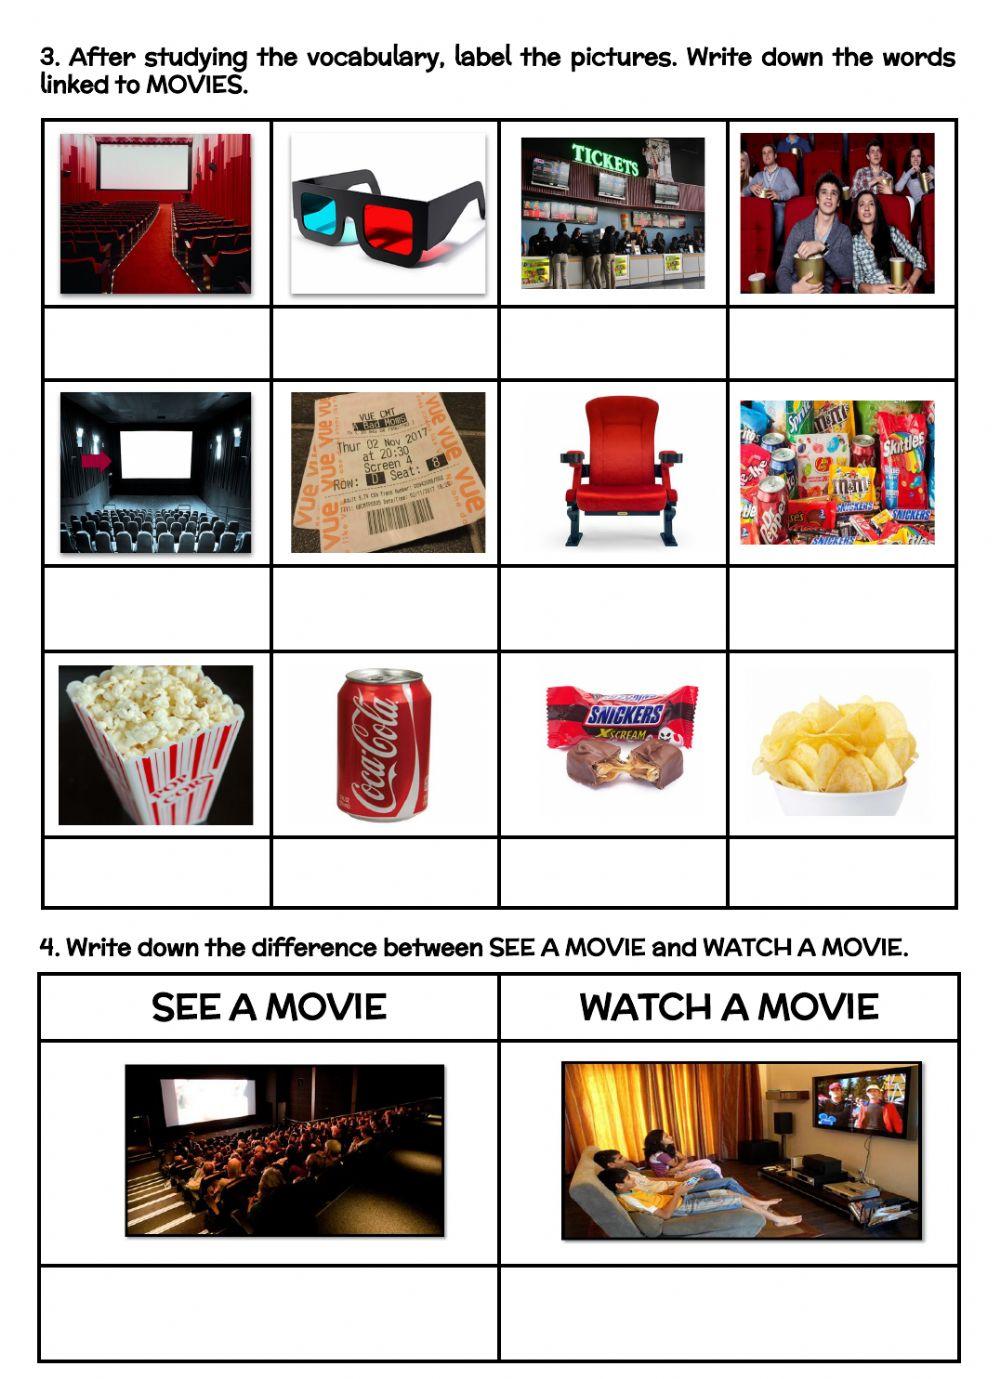 Movies and Films Vocabulary